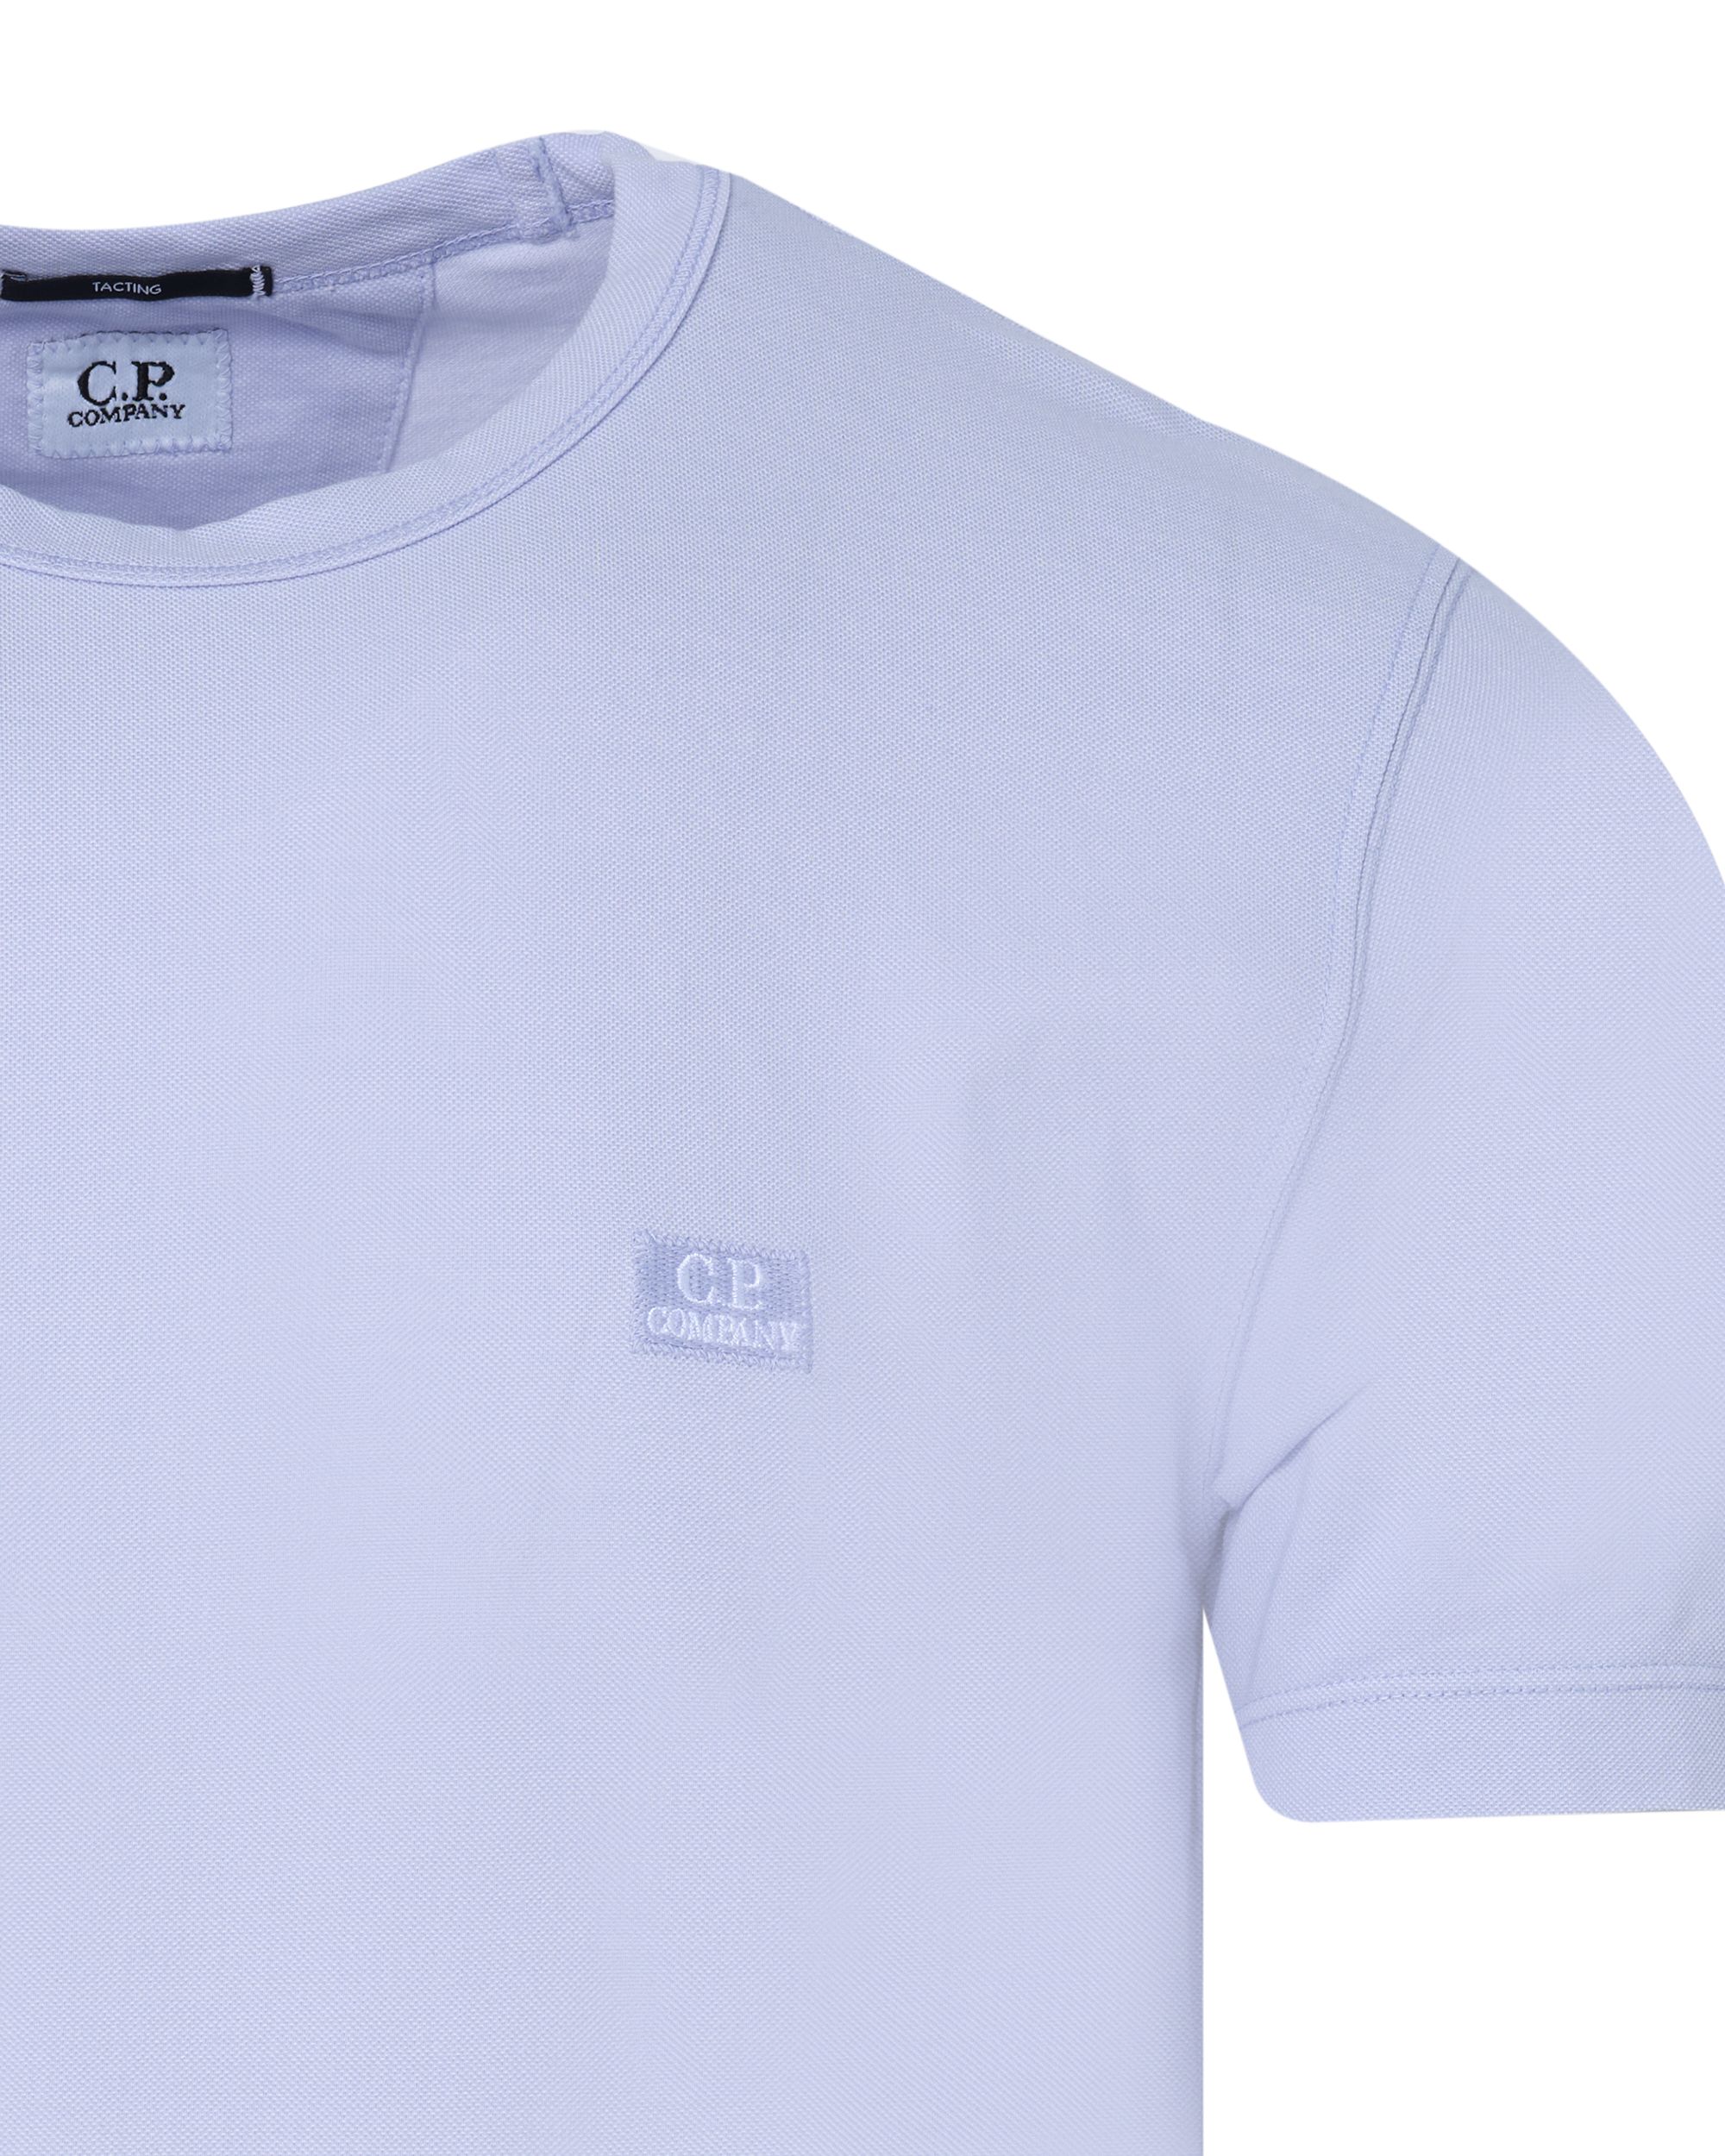 C.P Company T-shirt KM Lila 082476-001-L